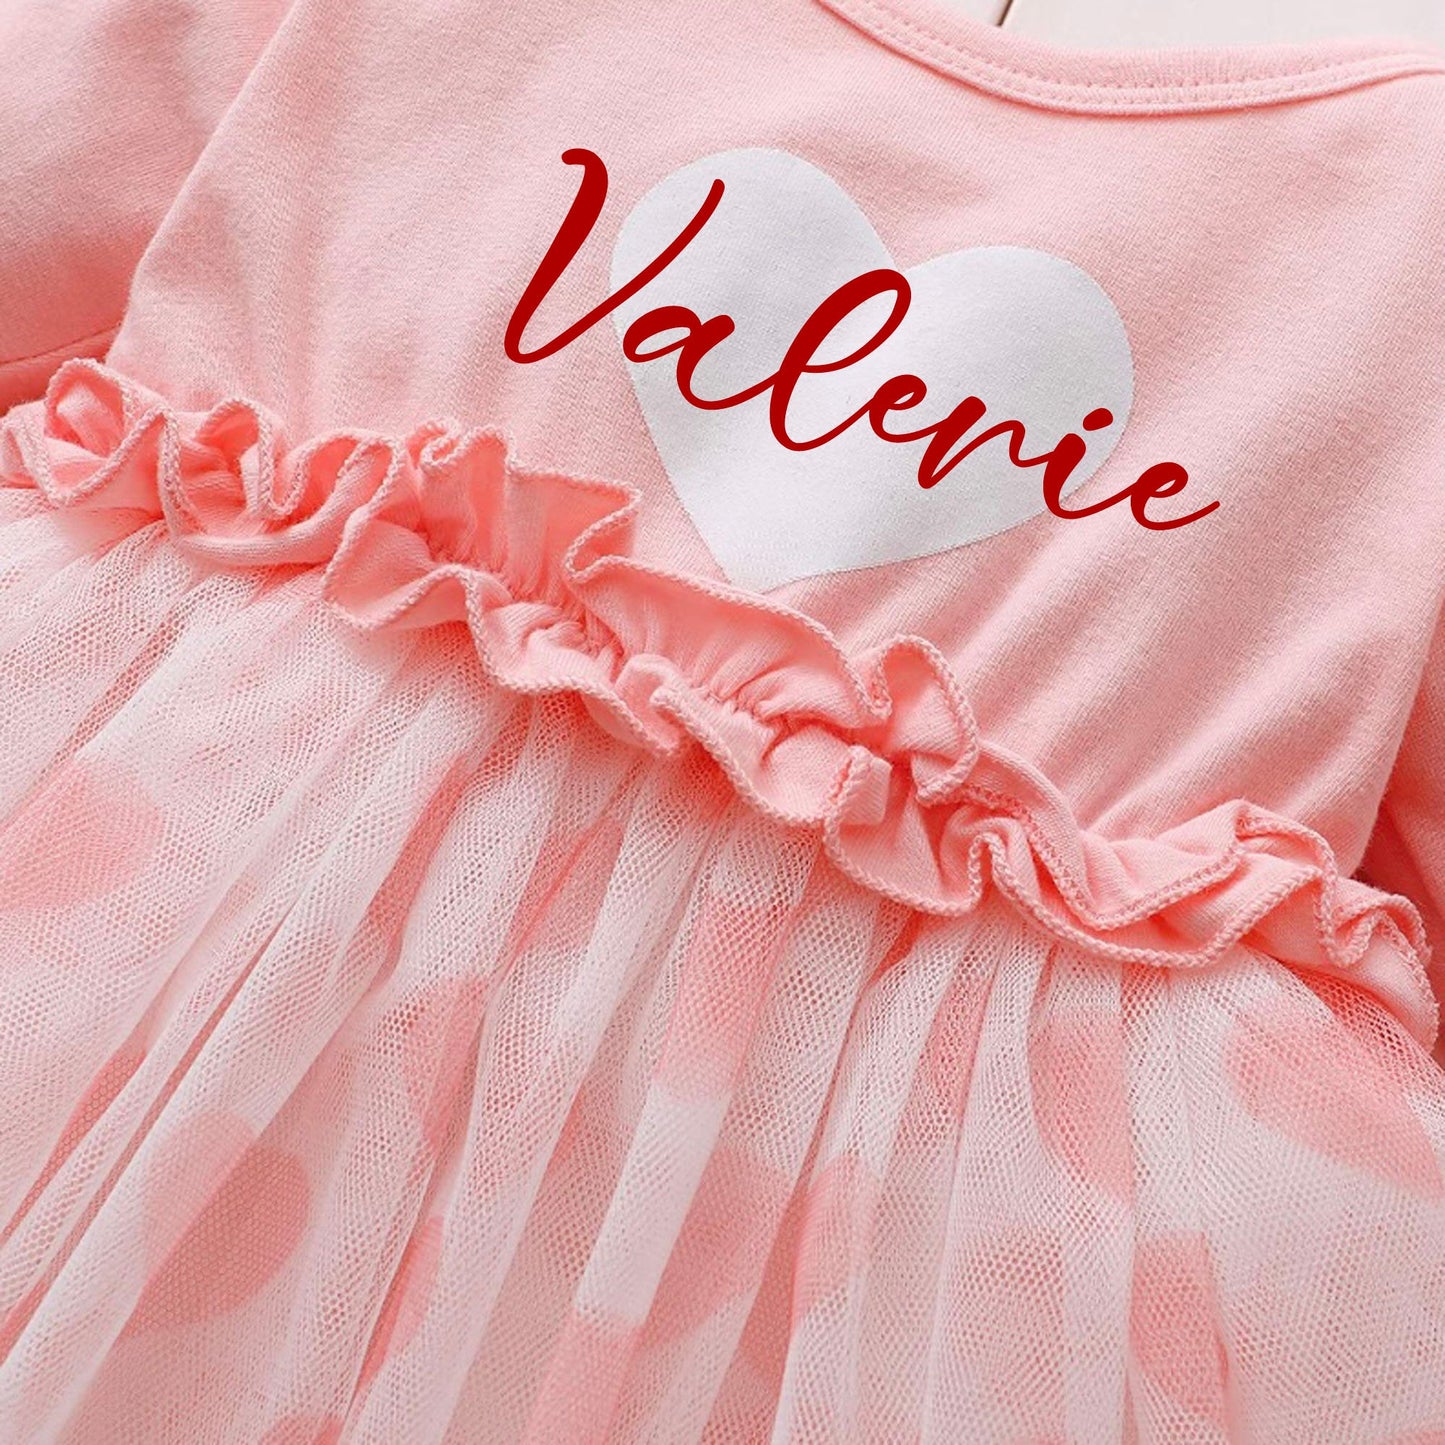 Baby Girl Valentine Heart Dress